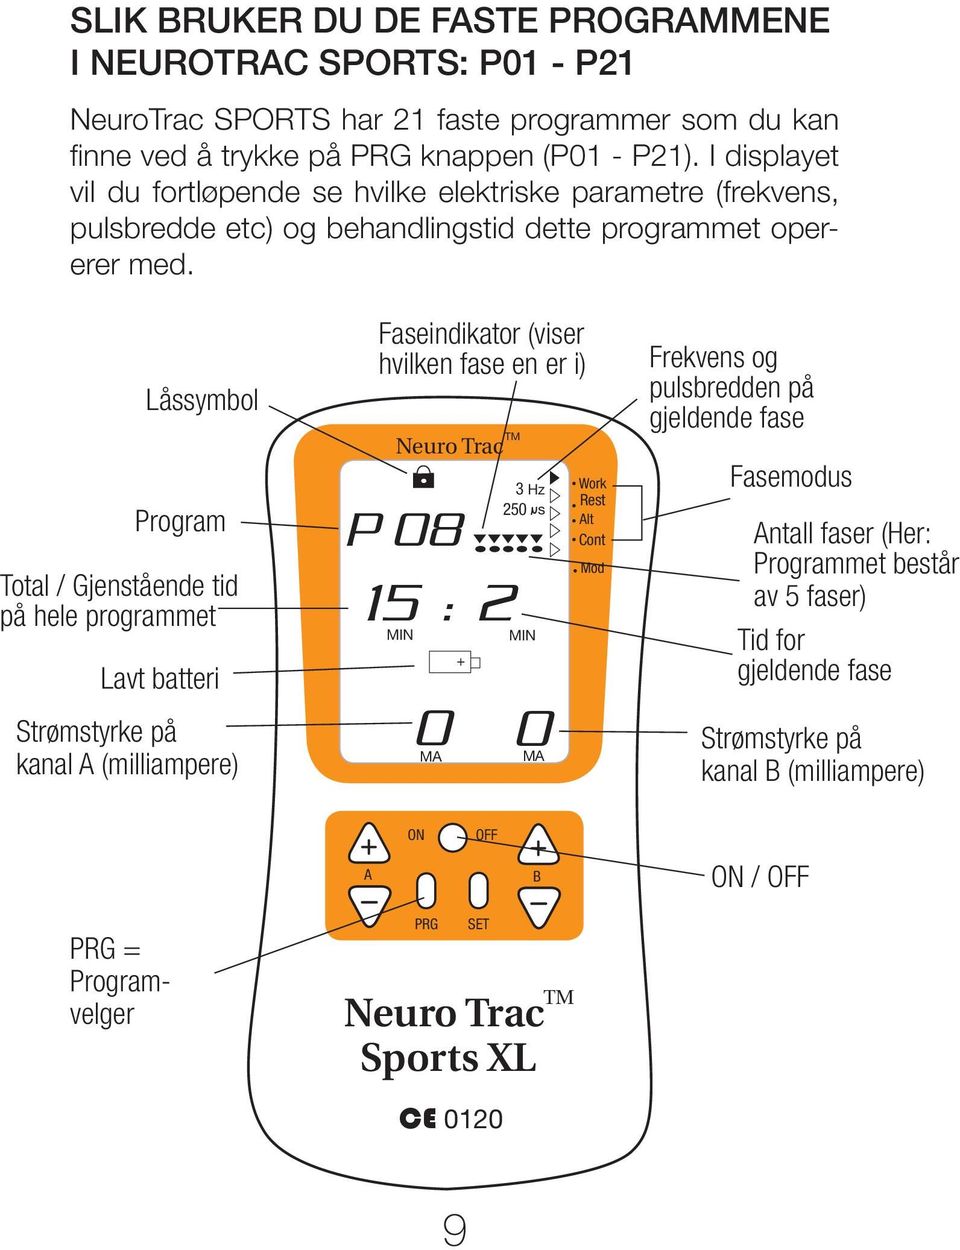 Låssymbol Program Total / Gjenstående tid på hele programmet Lavt batteri Strømstyrke på kanal A (milliampere) Faseindikator (viser hvilken fase en er i) Neuro Trac TM P 08 15 : 2 MIN MA + 3 Hz